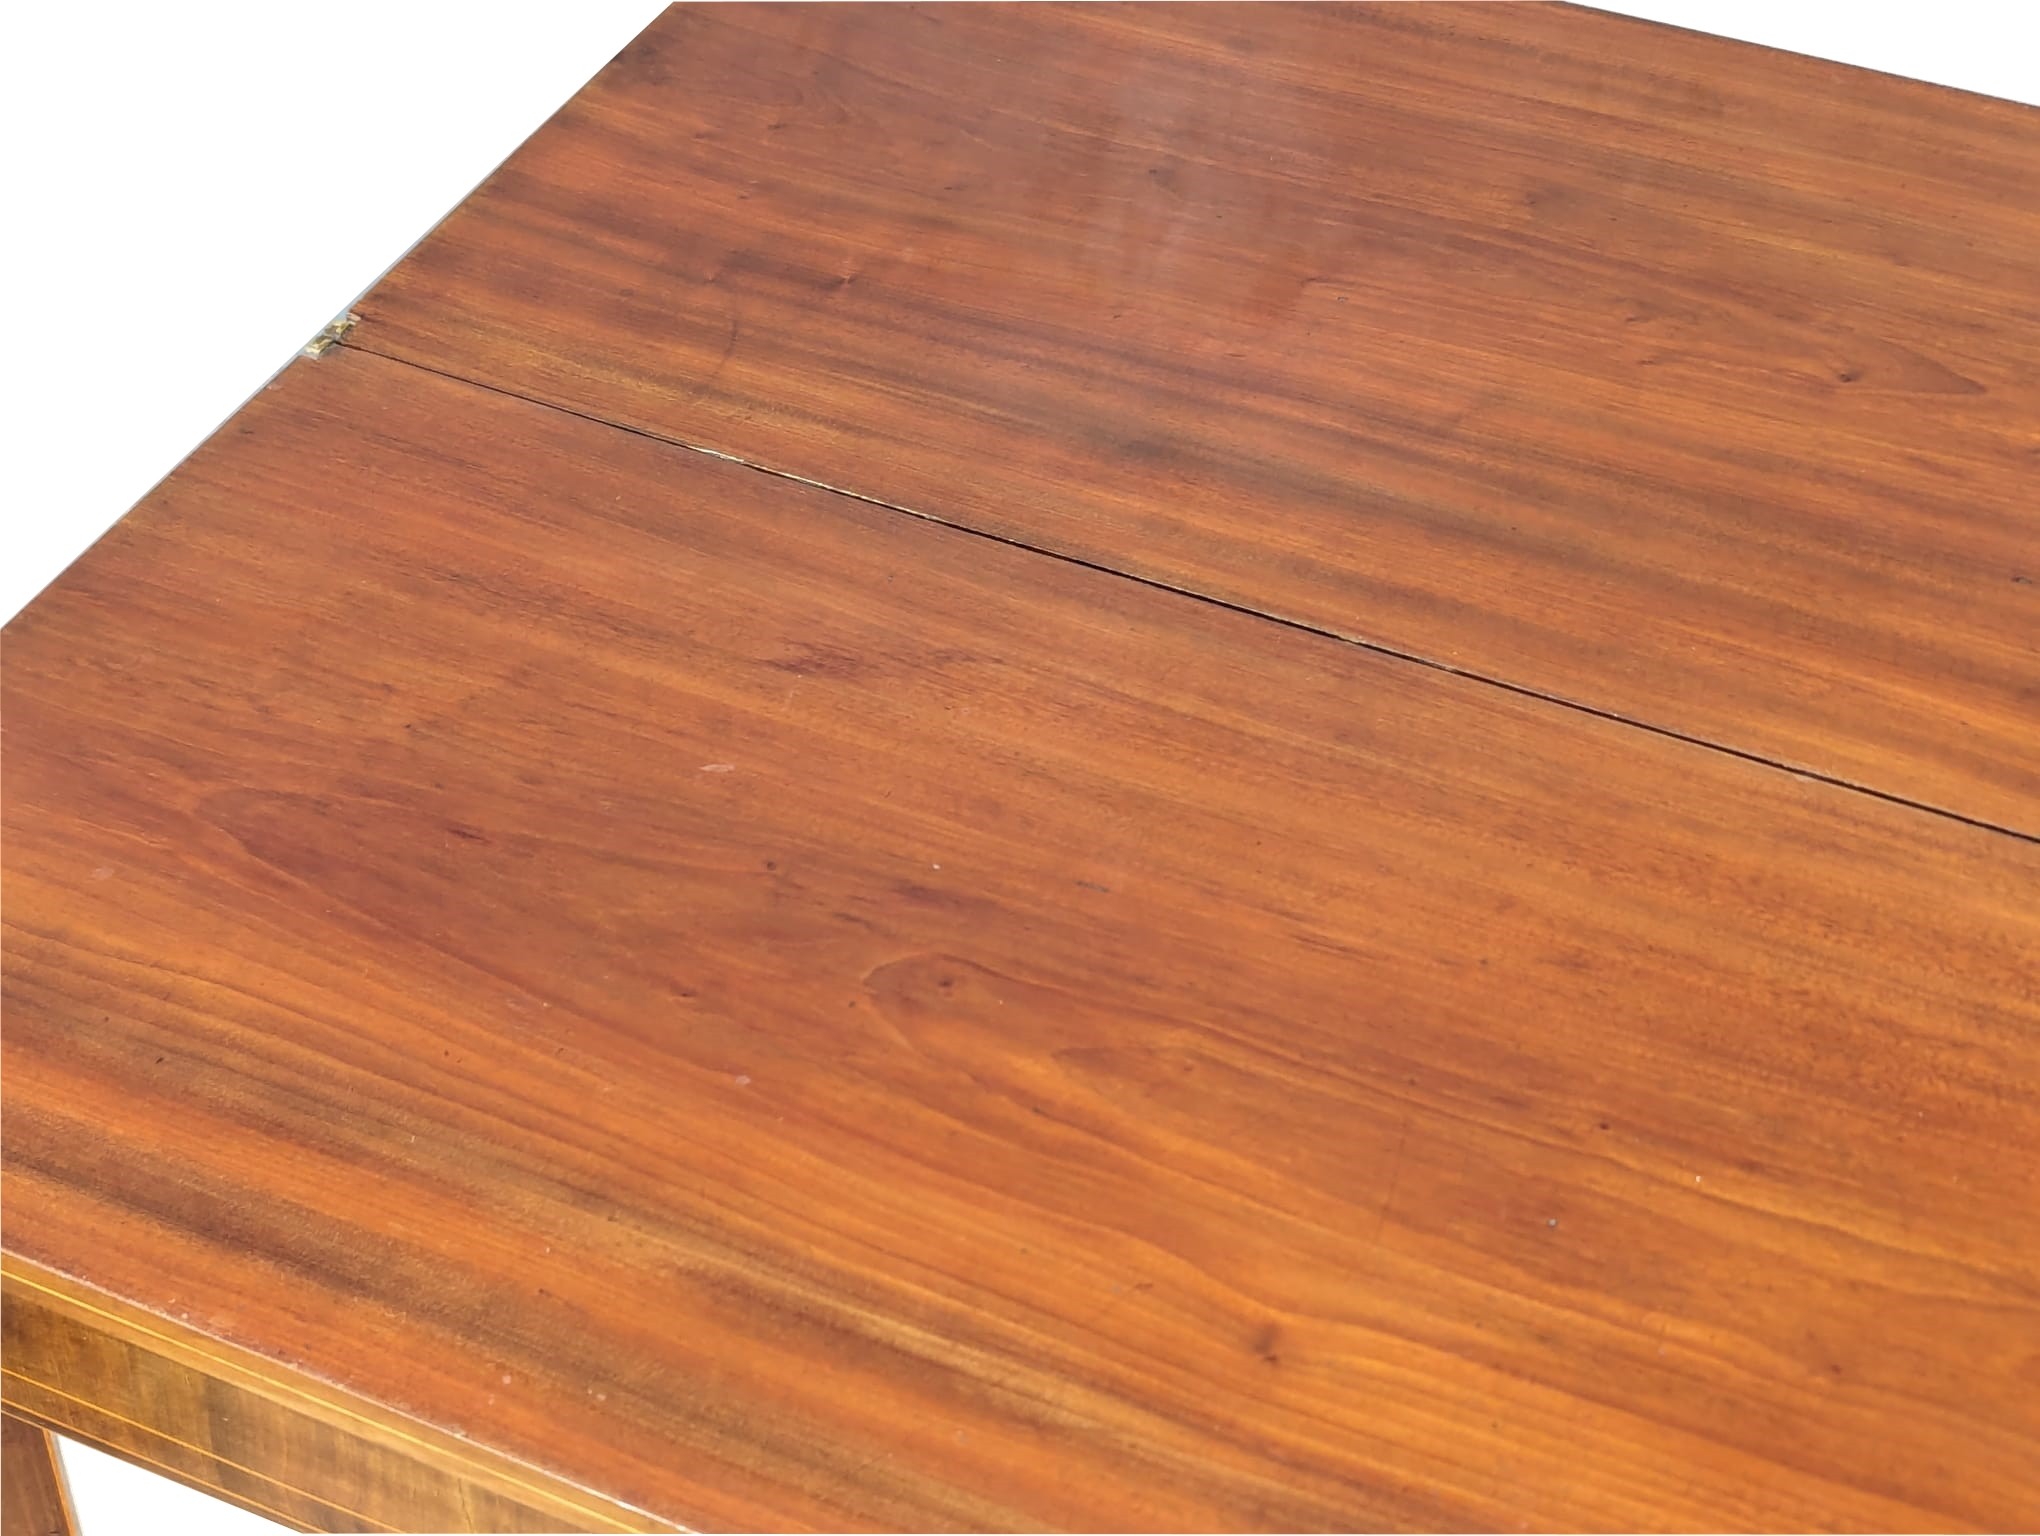 A George III Sheraton style inlaid mahogany turnover tea table. Circa 1800. 92x44x73.5cm - Image 6 of 7